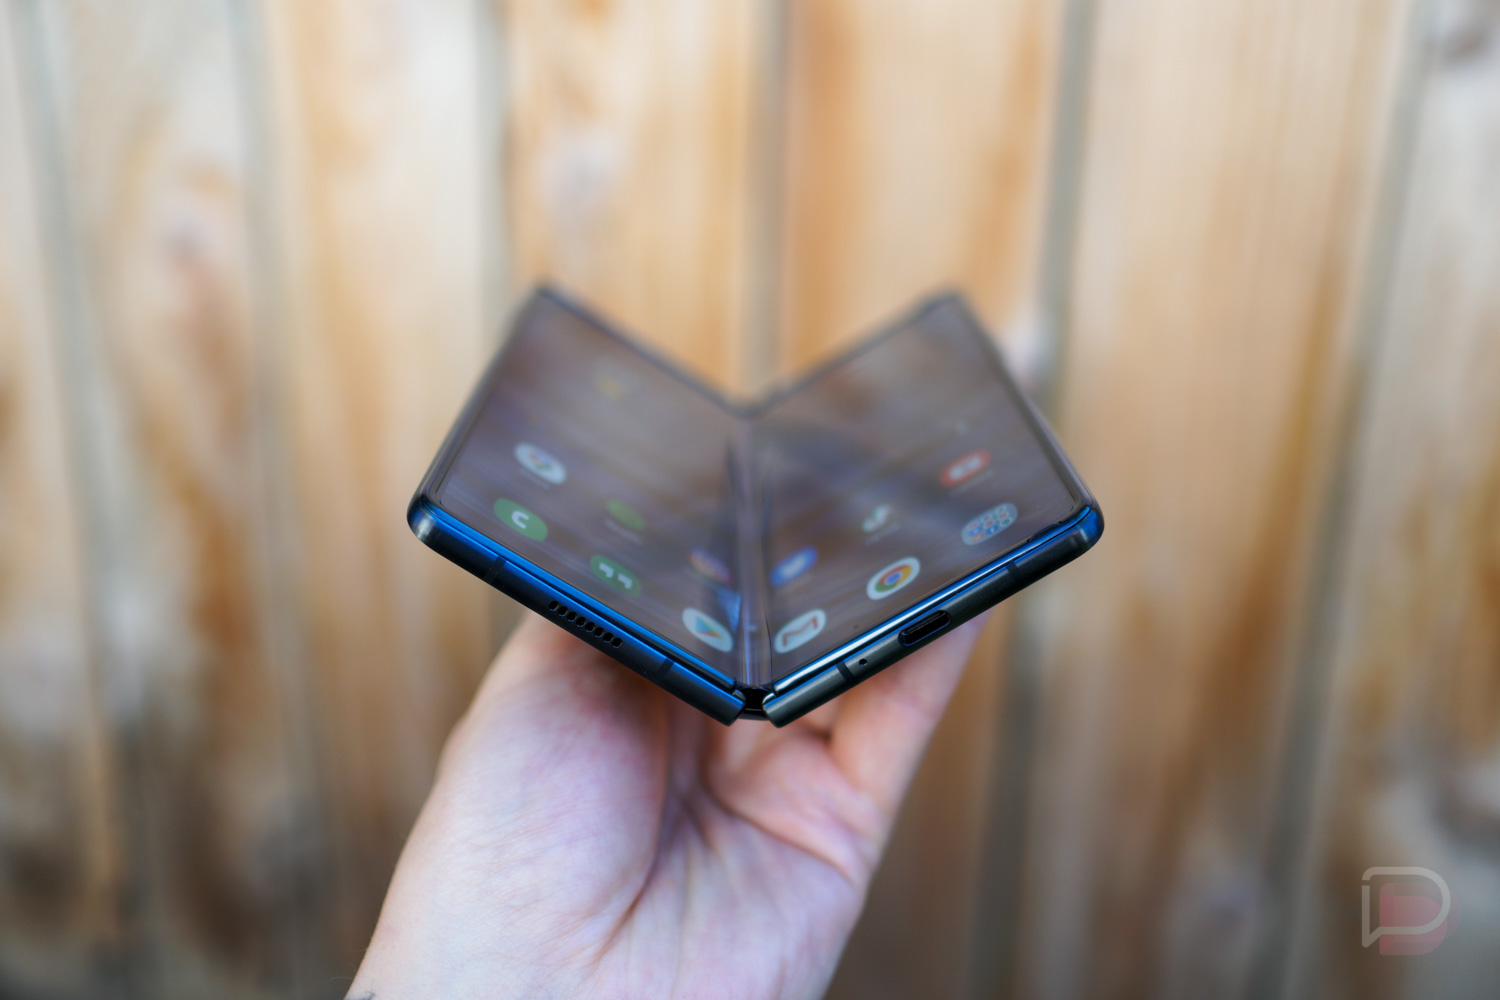 Samsung Galaxy Z Fold 2 review: An impressive multitasking machine